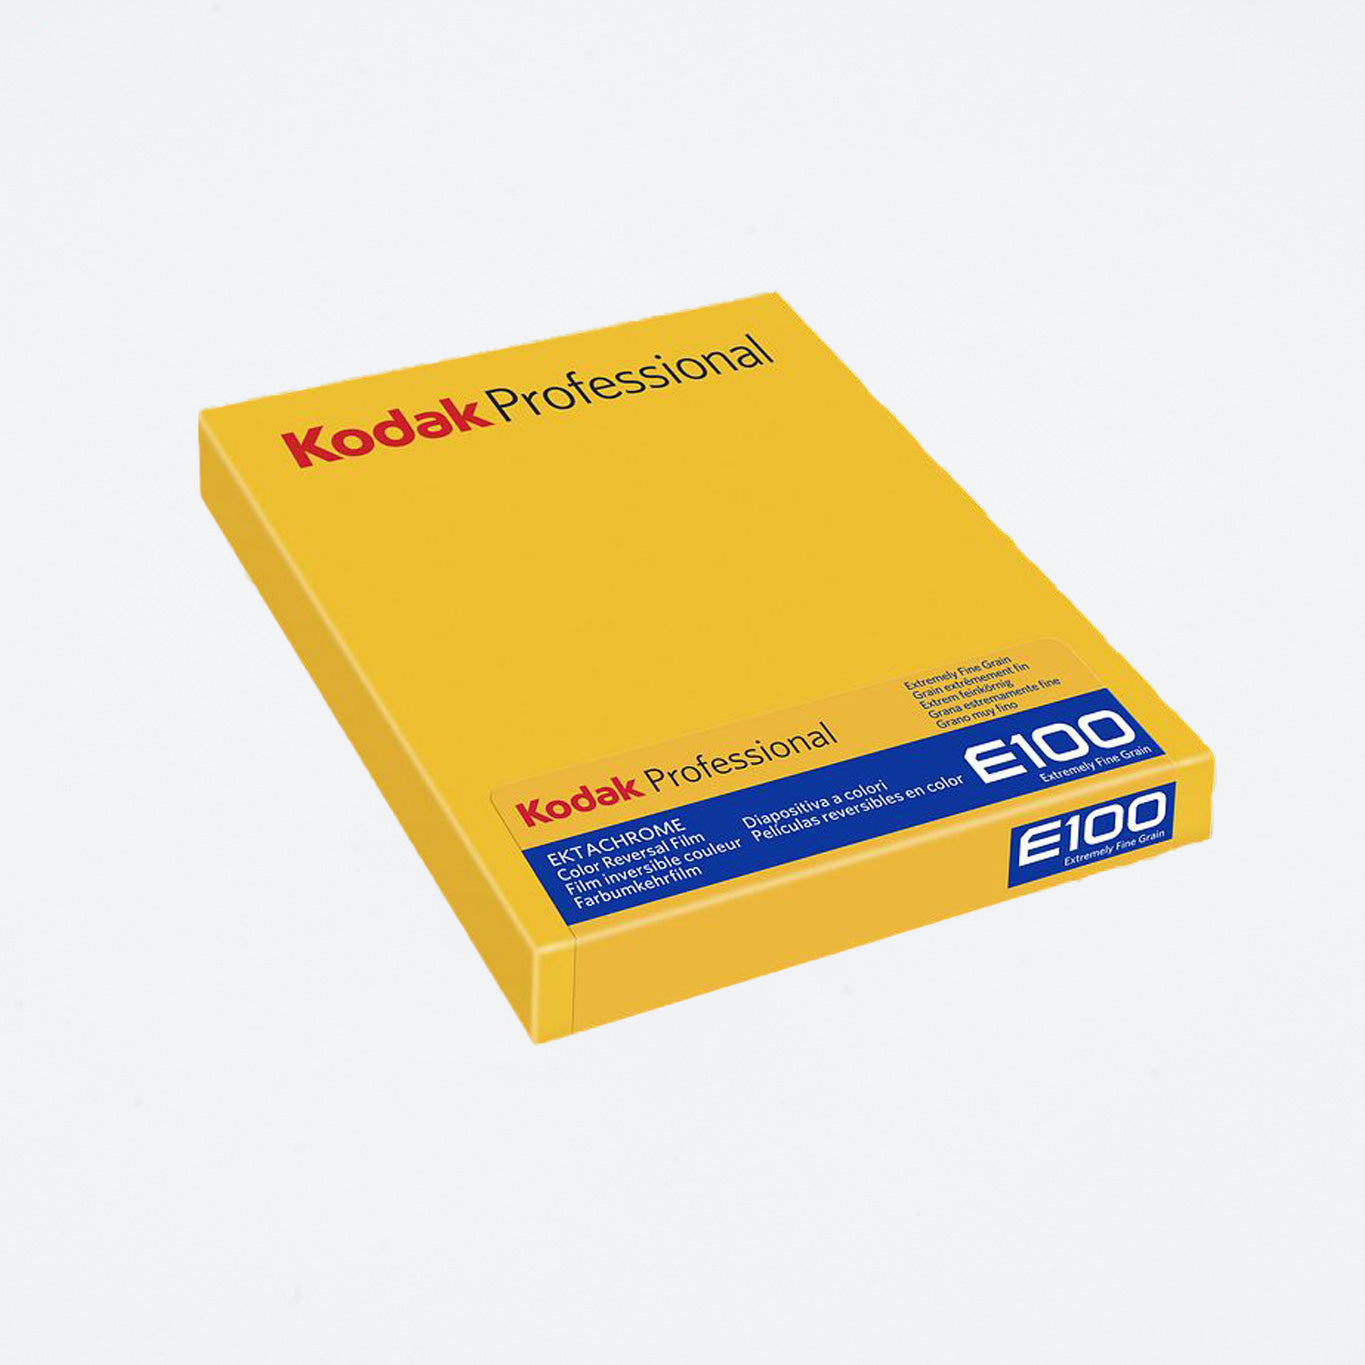 Kodak Ektachrome 100 Farb-Diafilm 4x5' (Großformat), 10 Blatt